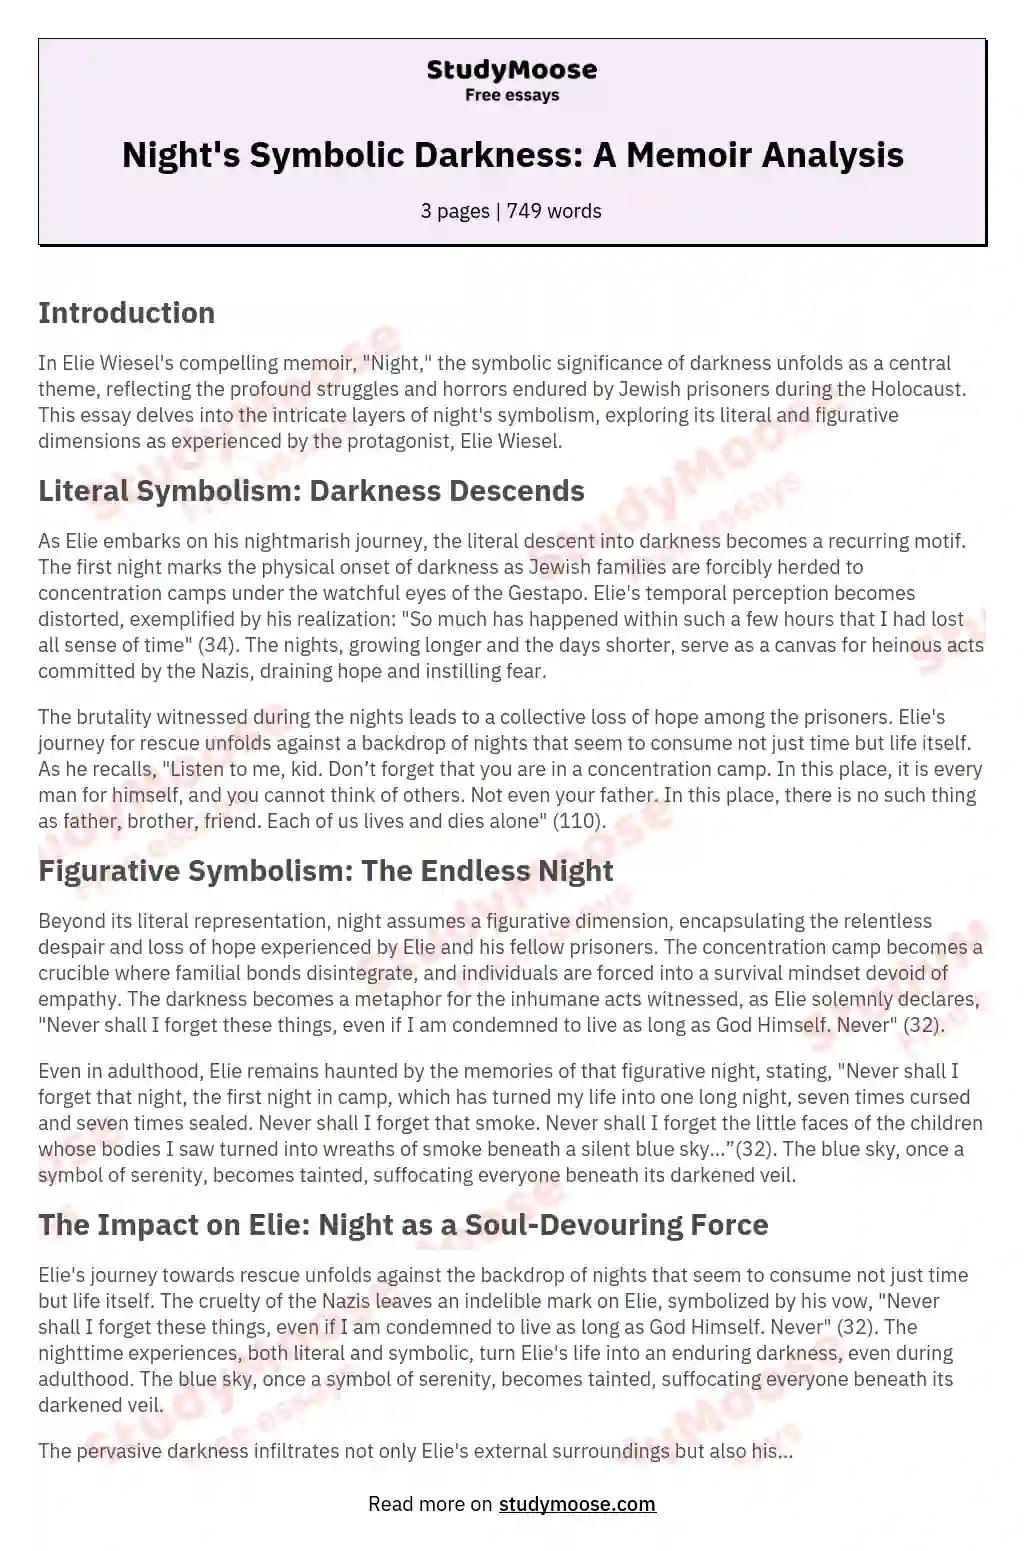 Night's Symbolic Darkness: A Memoir Analysis essay